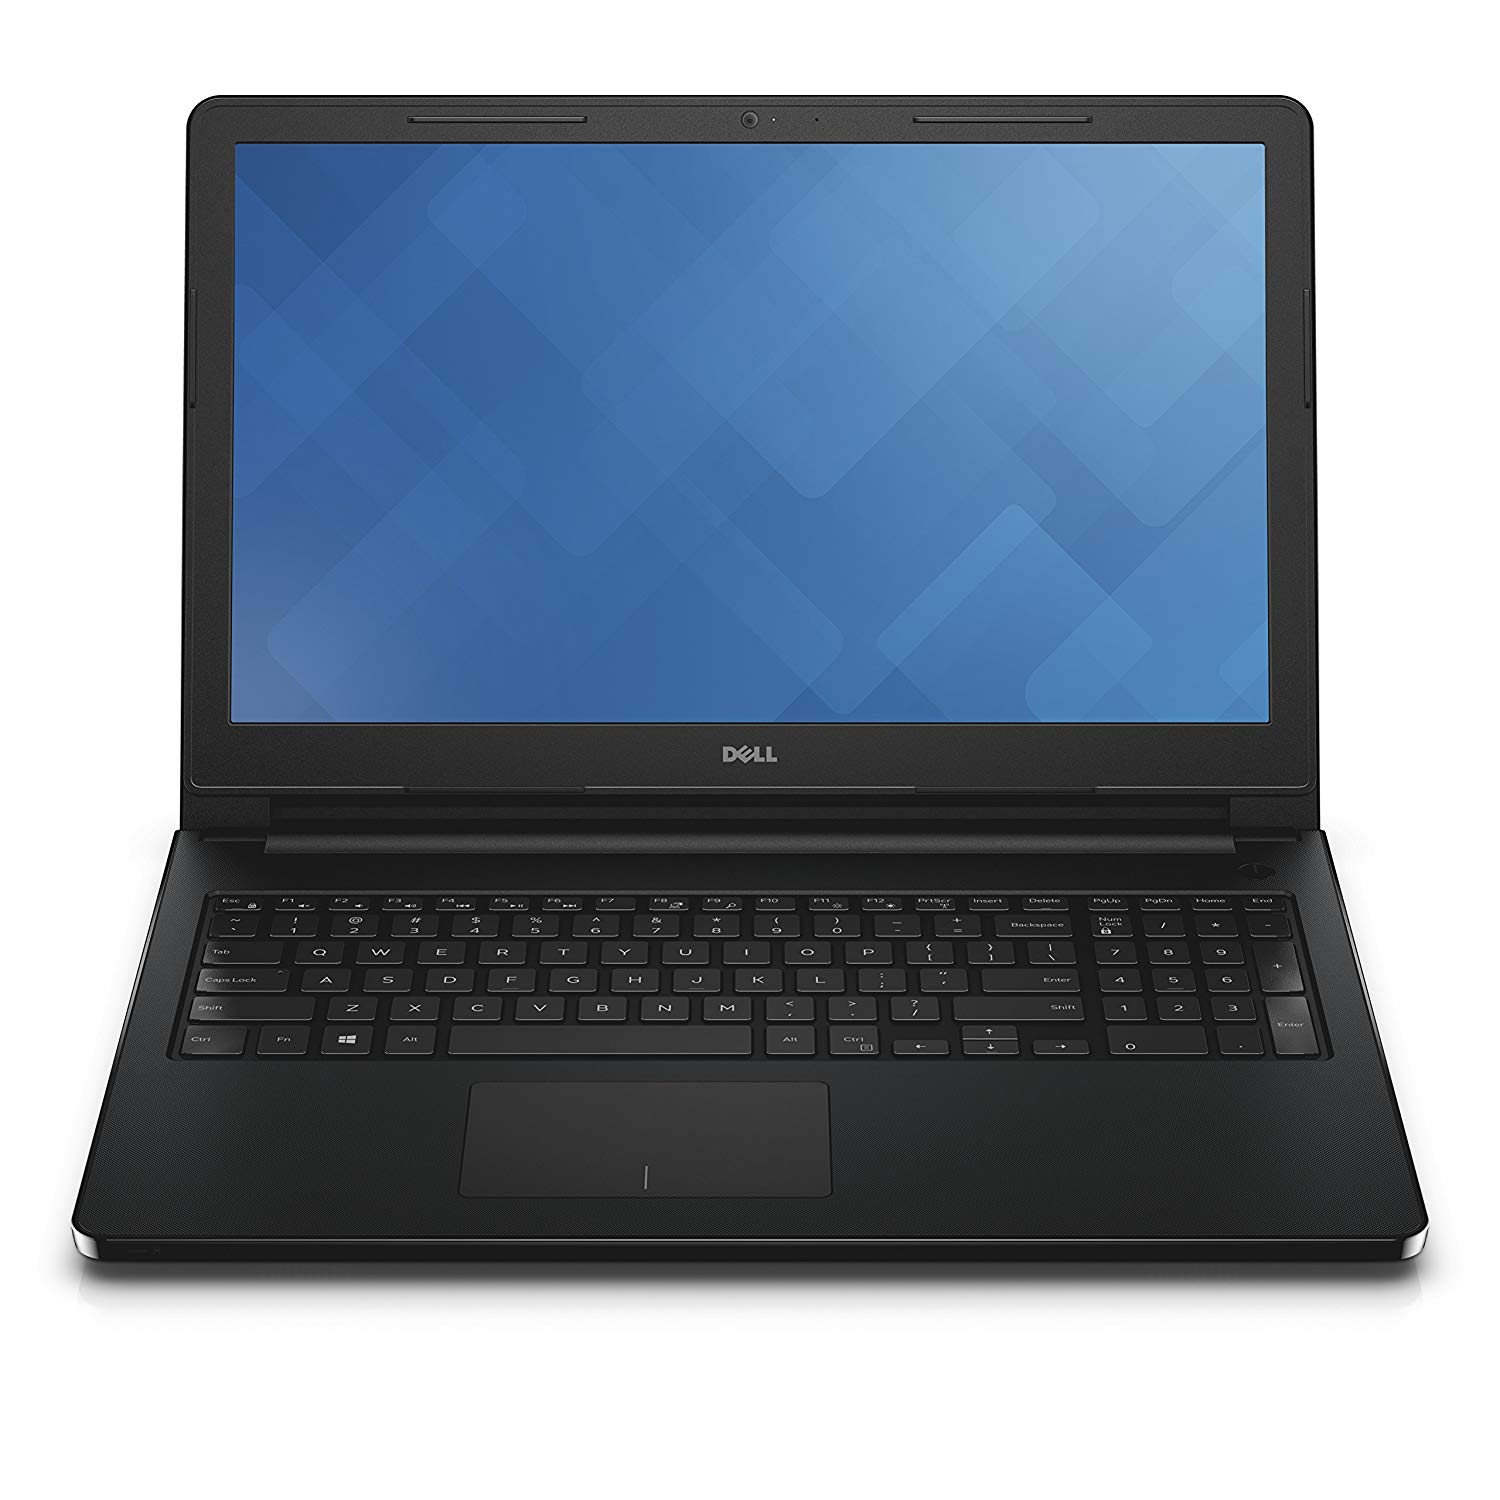 لپ تاپ - Laptop   دل-Dell  Inspiron -3552 - CELERON N3060-4GB-500GB